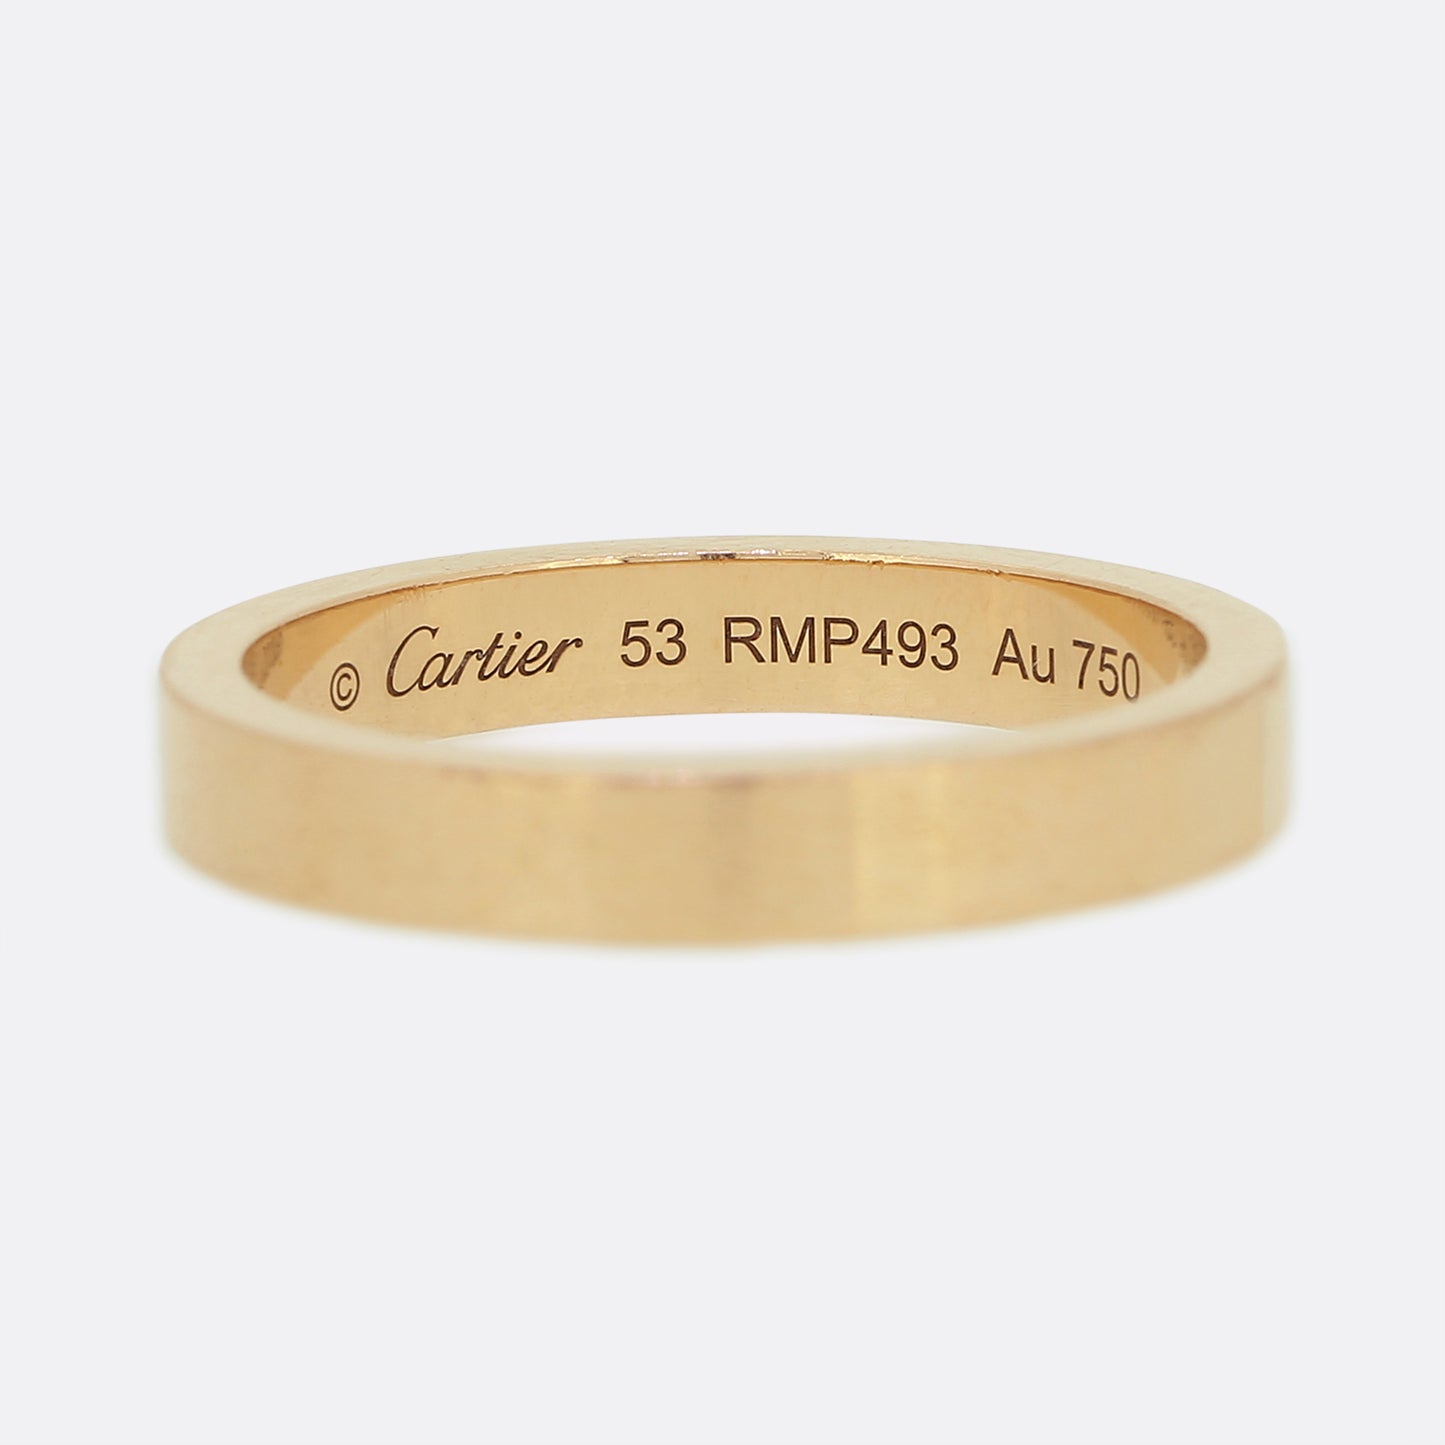 Cartier C De Cartier 3mm Wedding Ring